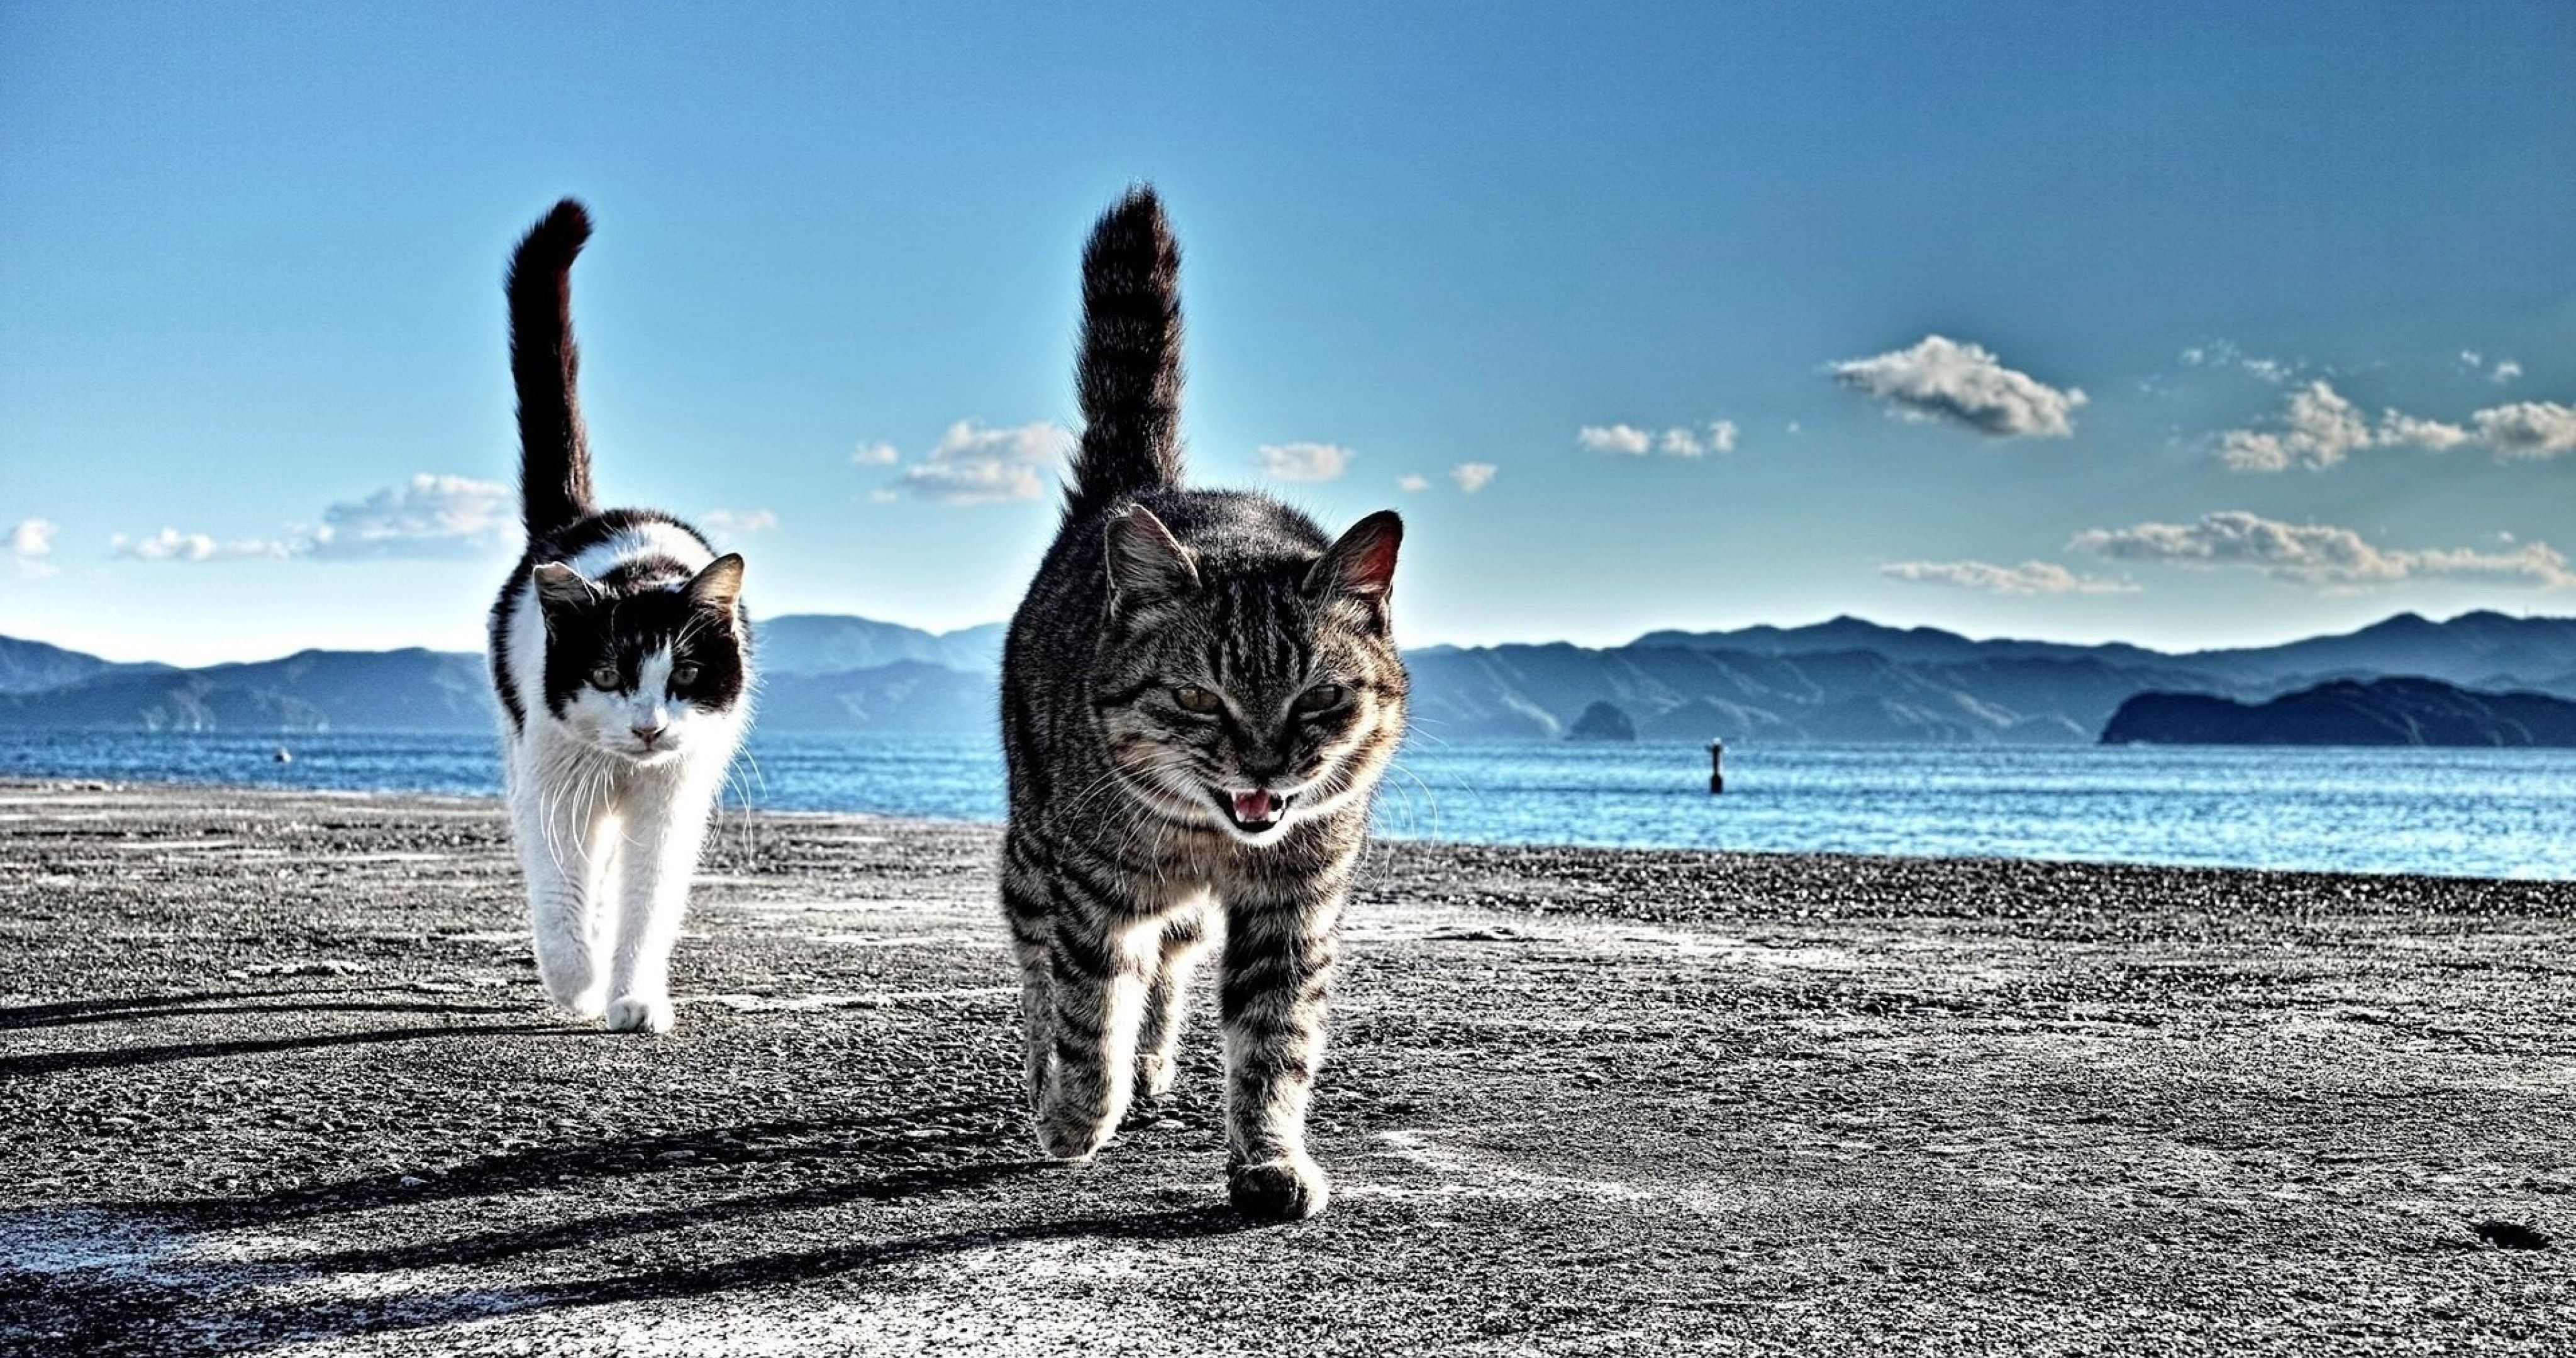 cats on beach 4k ultra HD wallpaper. Cat background, Cats, Cat walk